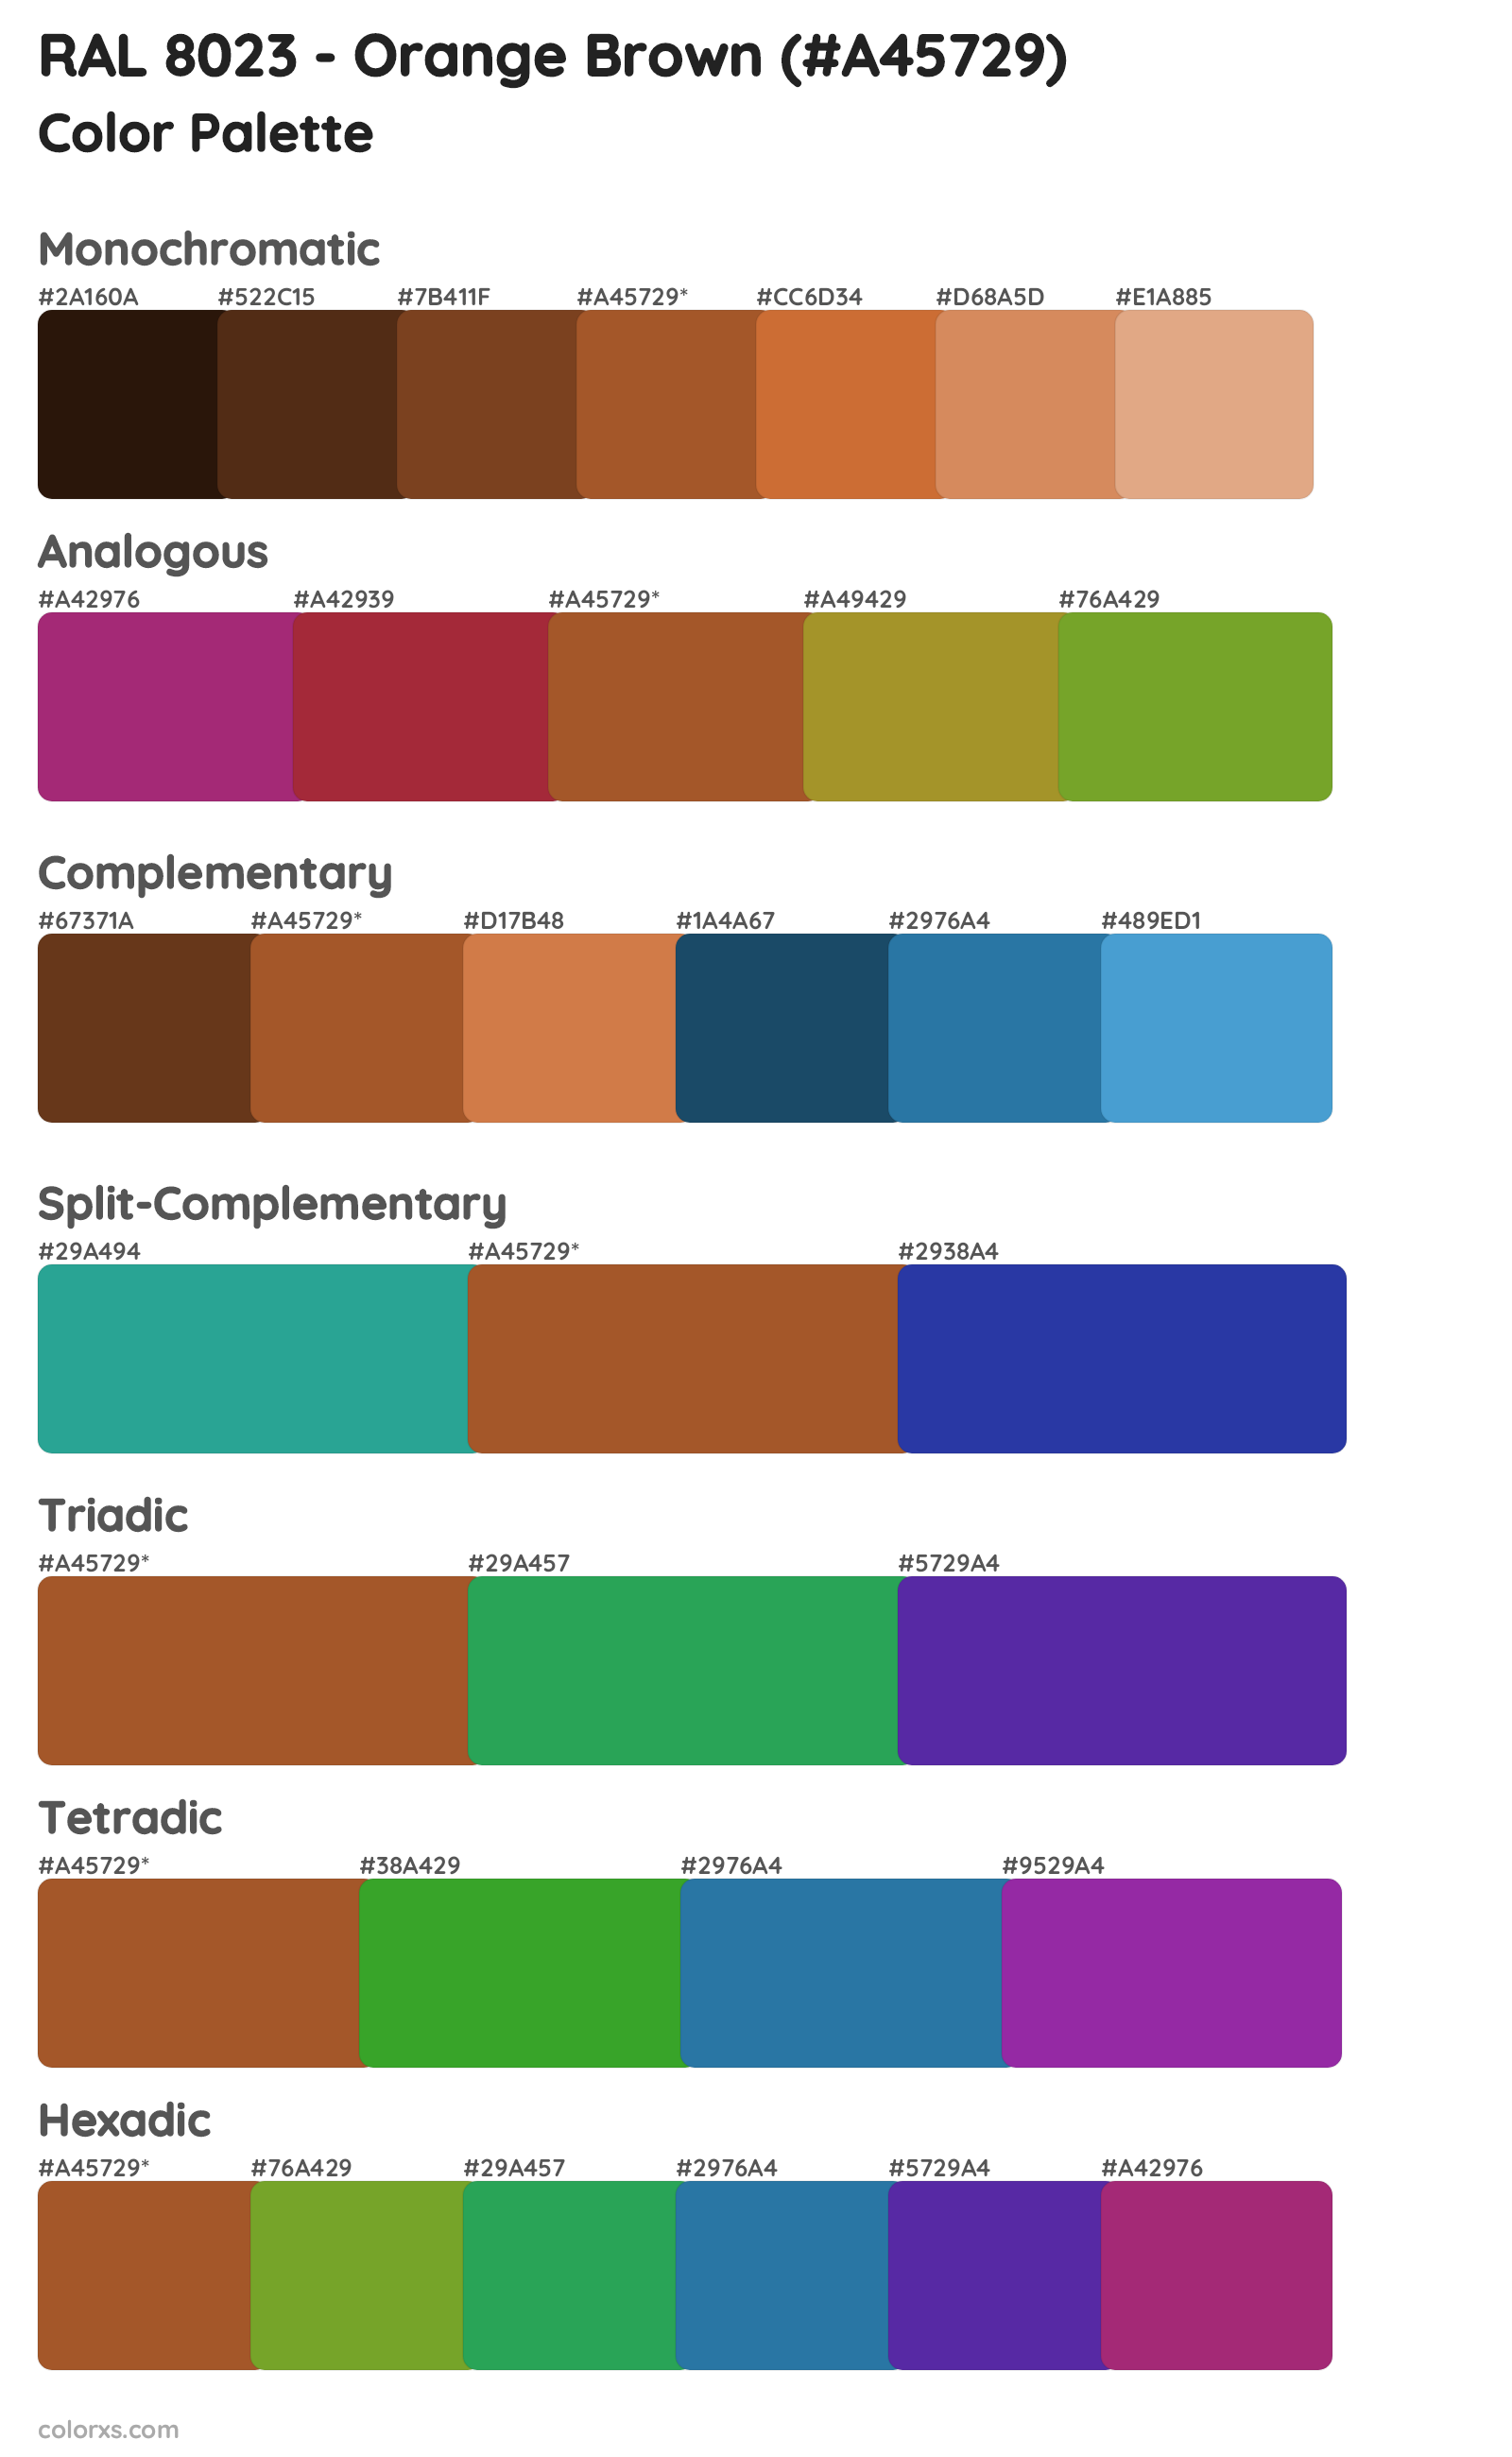 RAL 8023 - Orange Brown Color Scheme Palettes